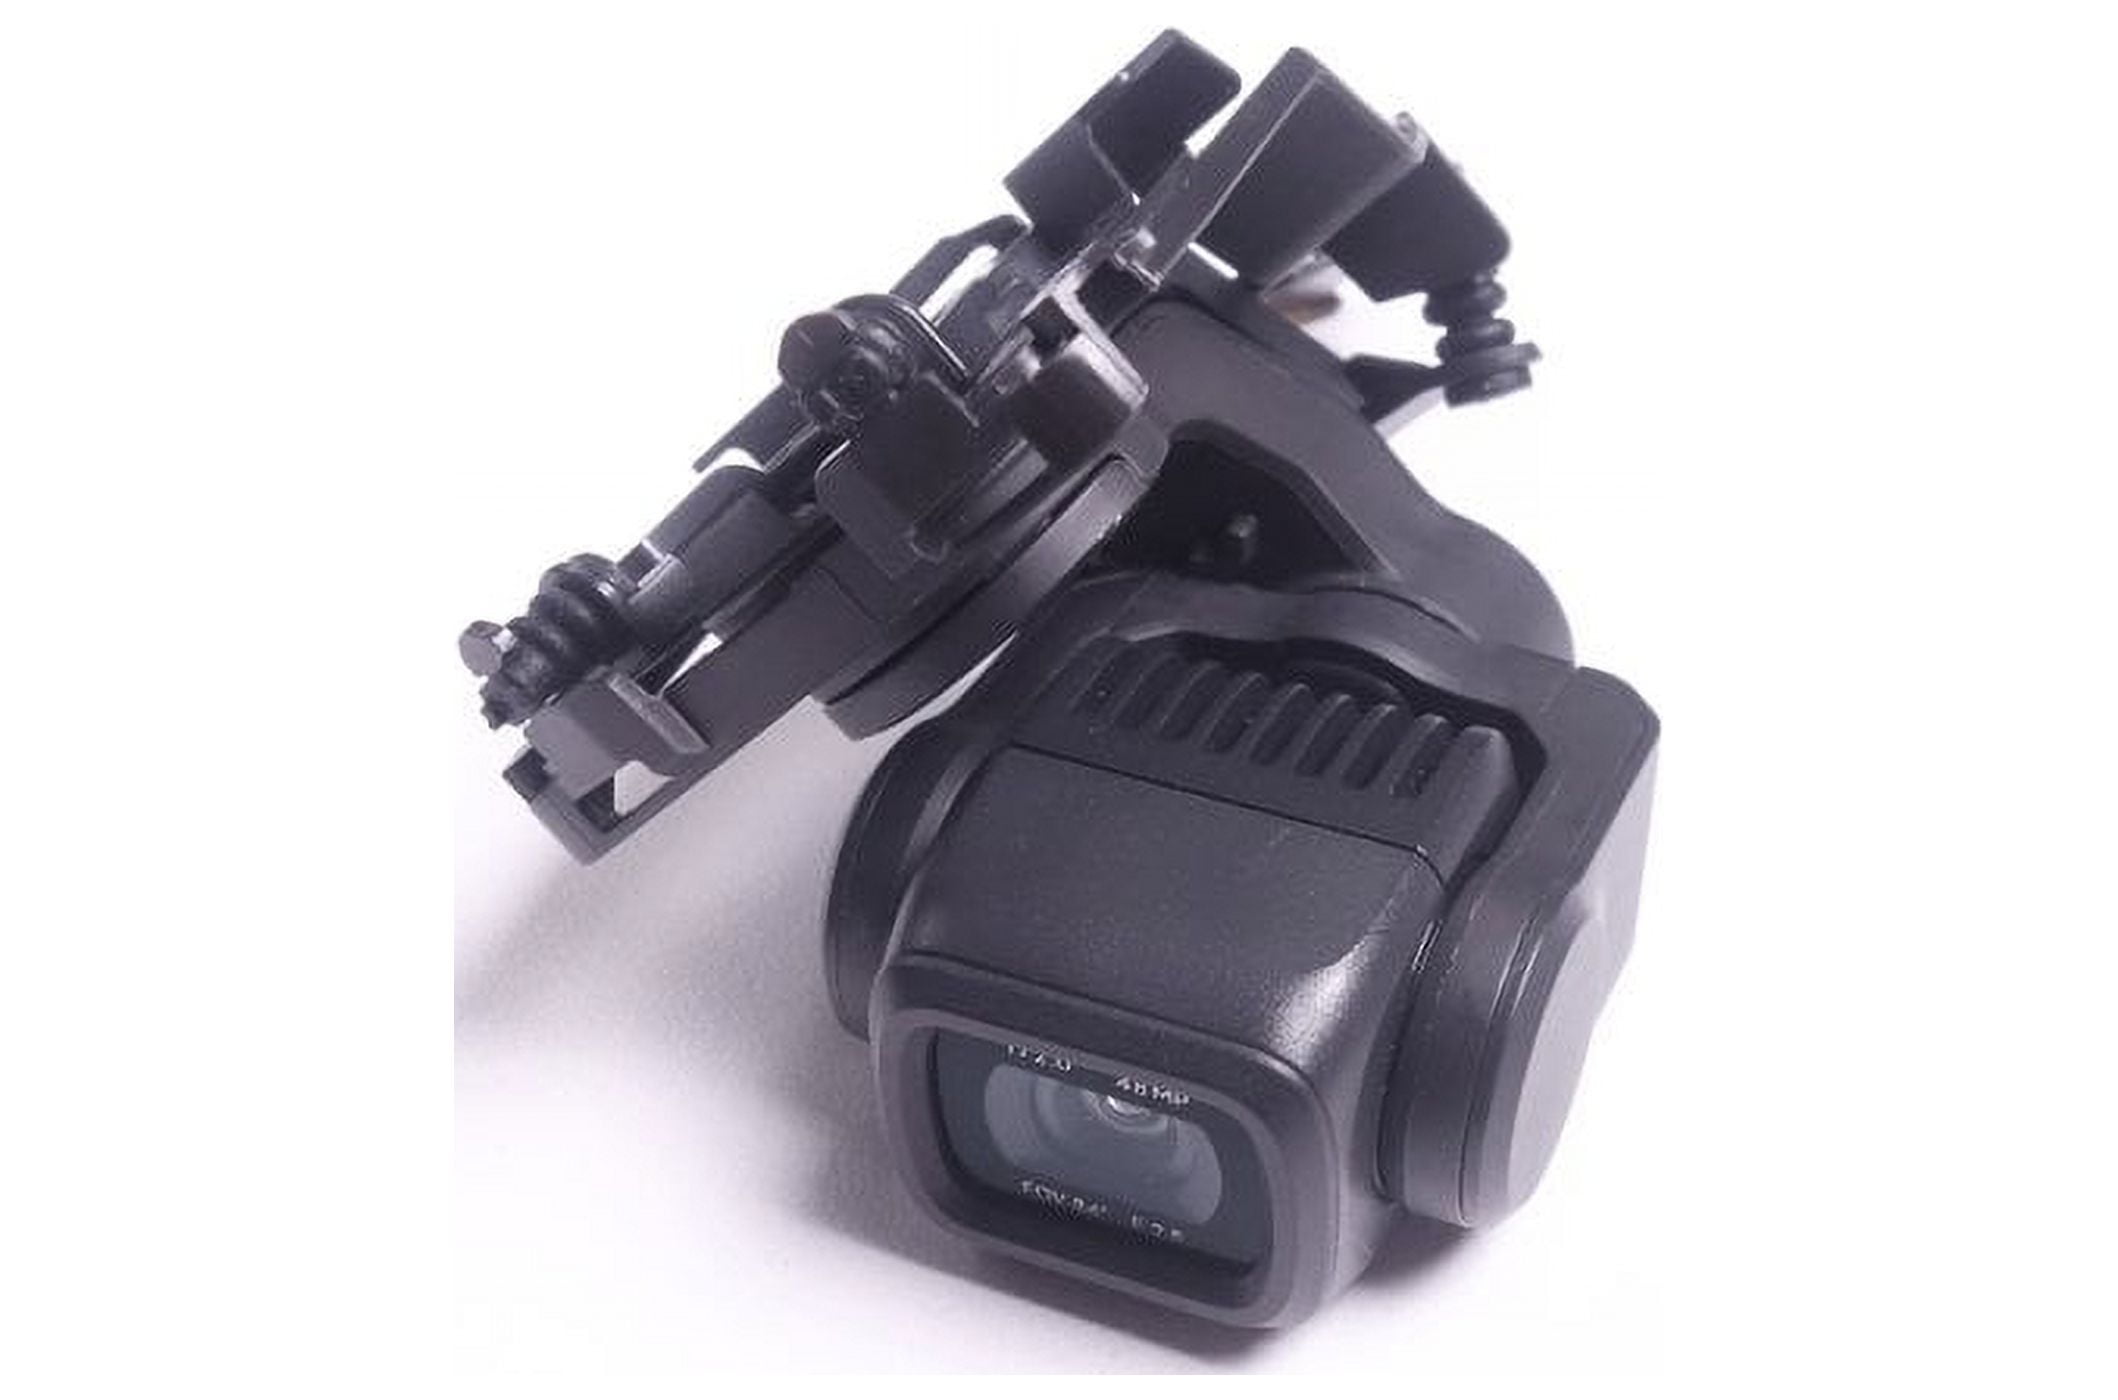 Mavic Mini 2 Gimbal Camera Module